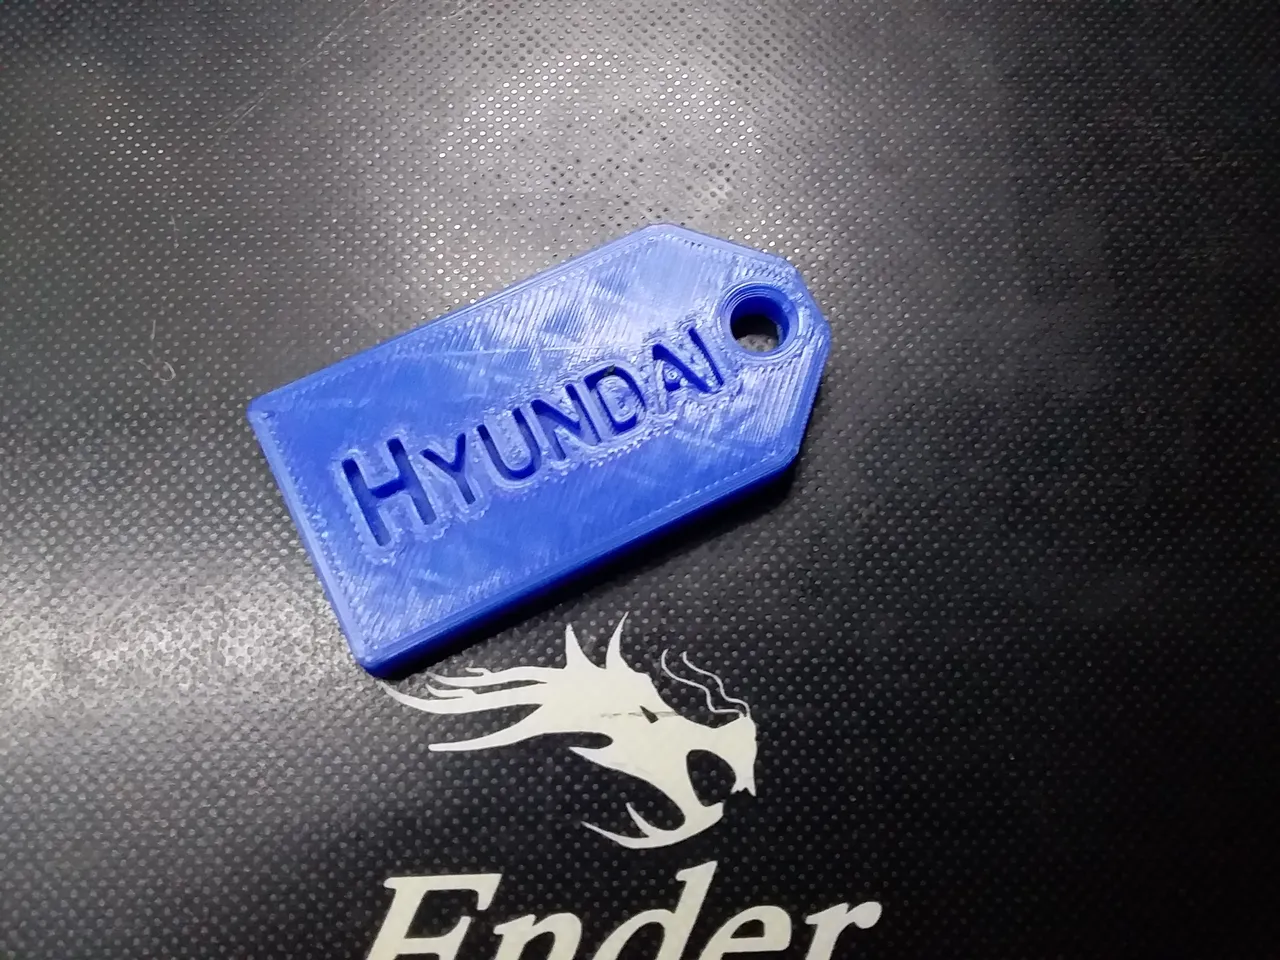 Free STL file Pendant porte clé Hyundai / Hyundai Key ring